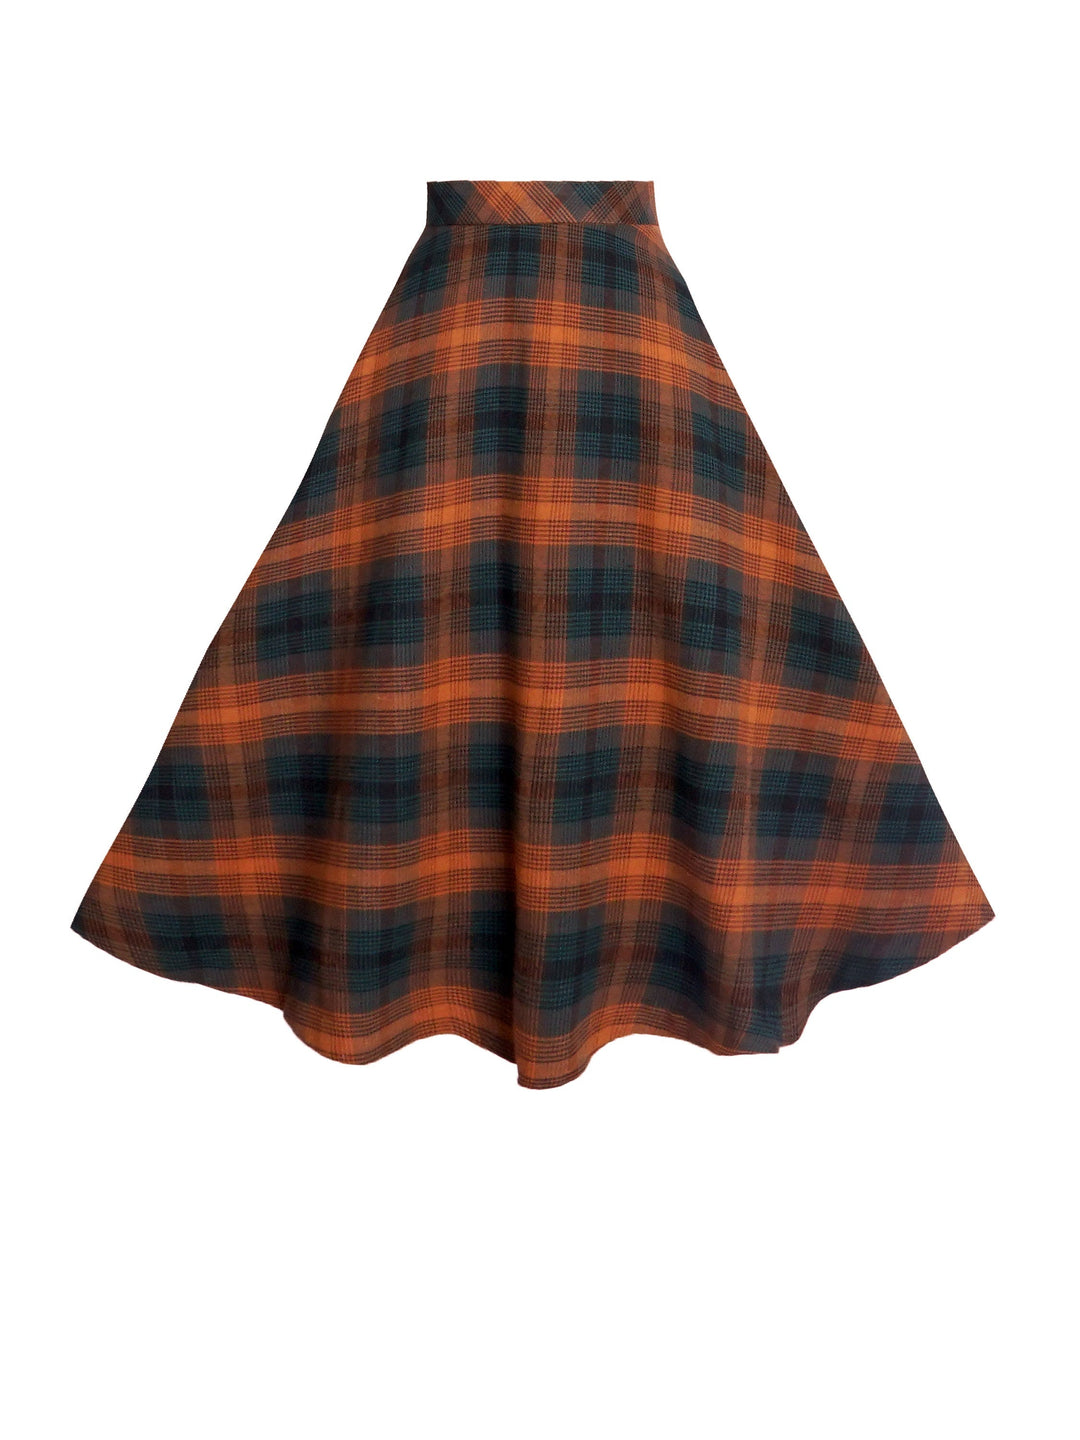 Choose a fabric: Lilian Skirt